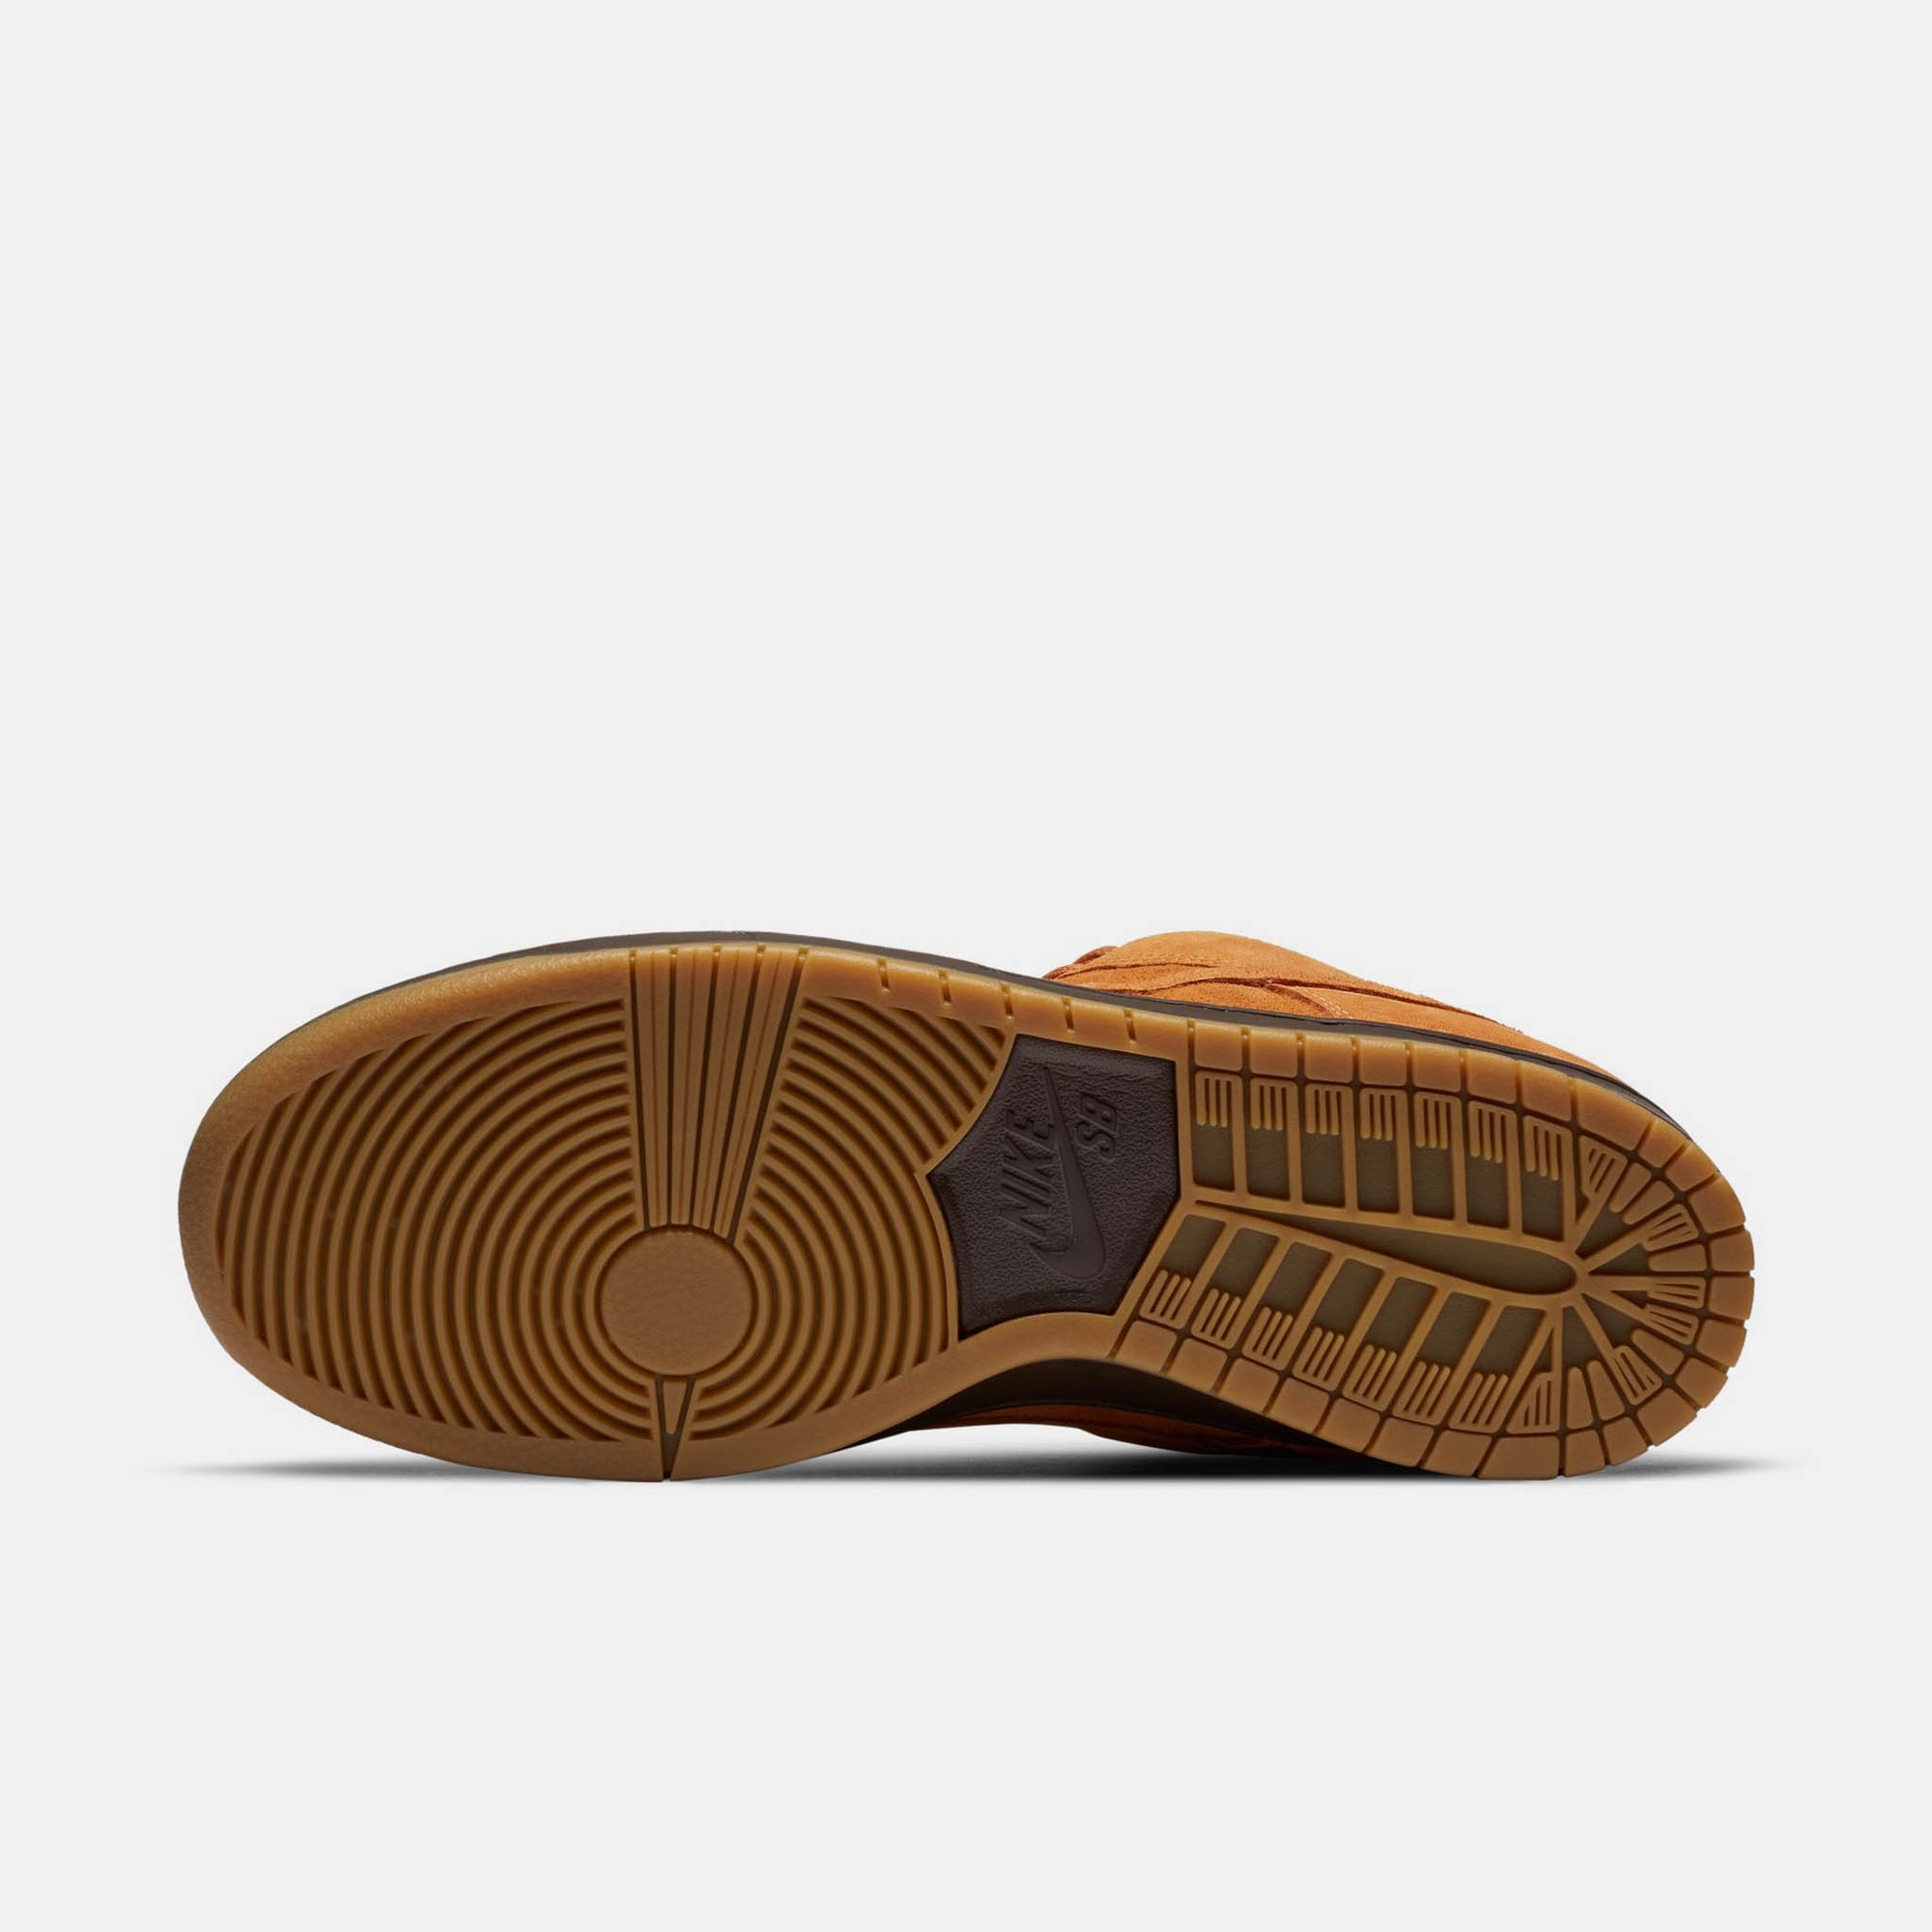 Nike SB - 'Flax' Dunk Low Pro Shoes - Flax / Flax - Flax - Baroque Brown